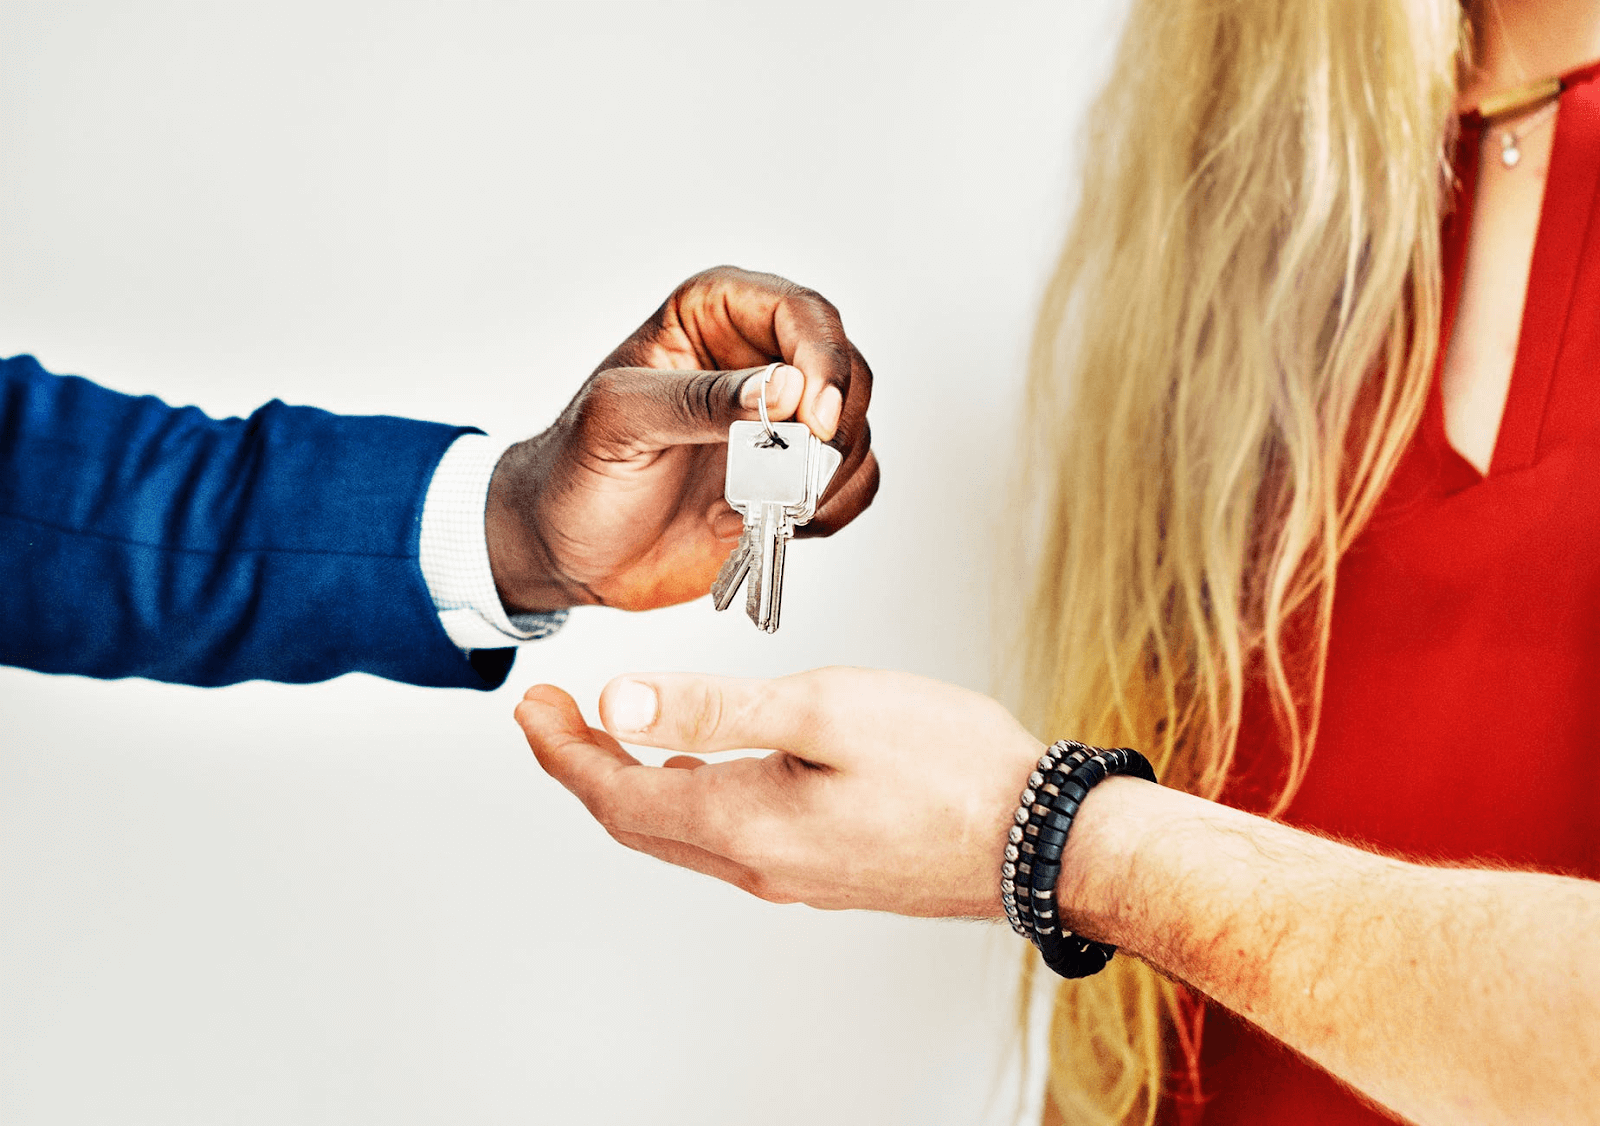 Person handing keys to someone